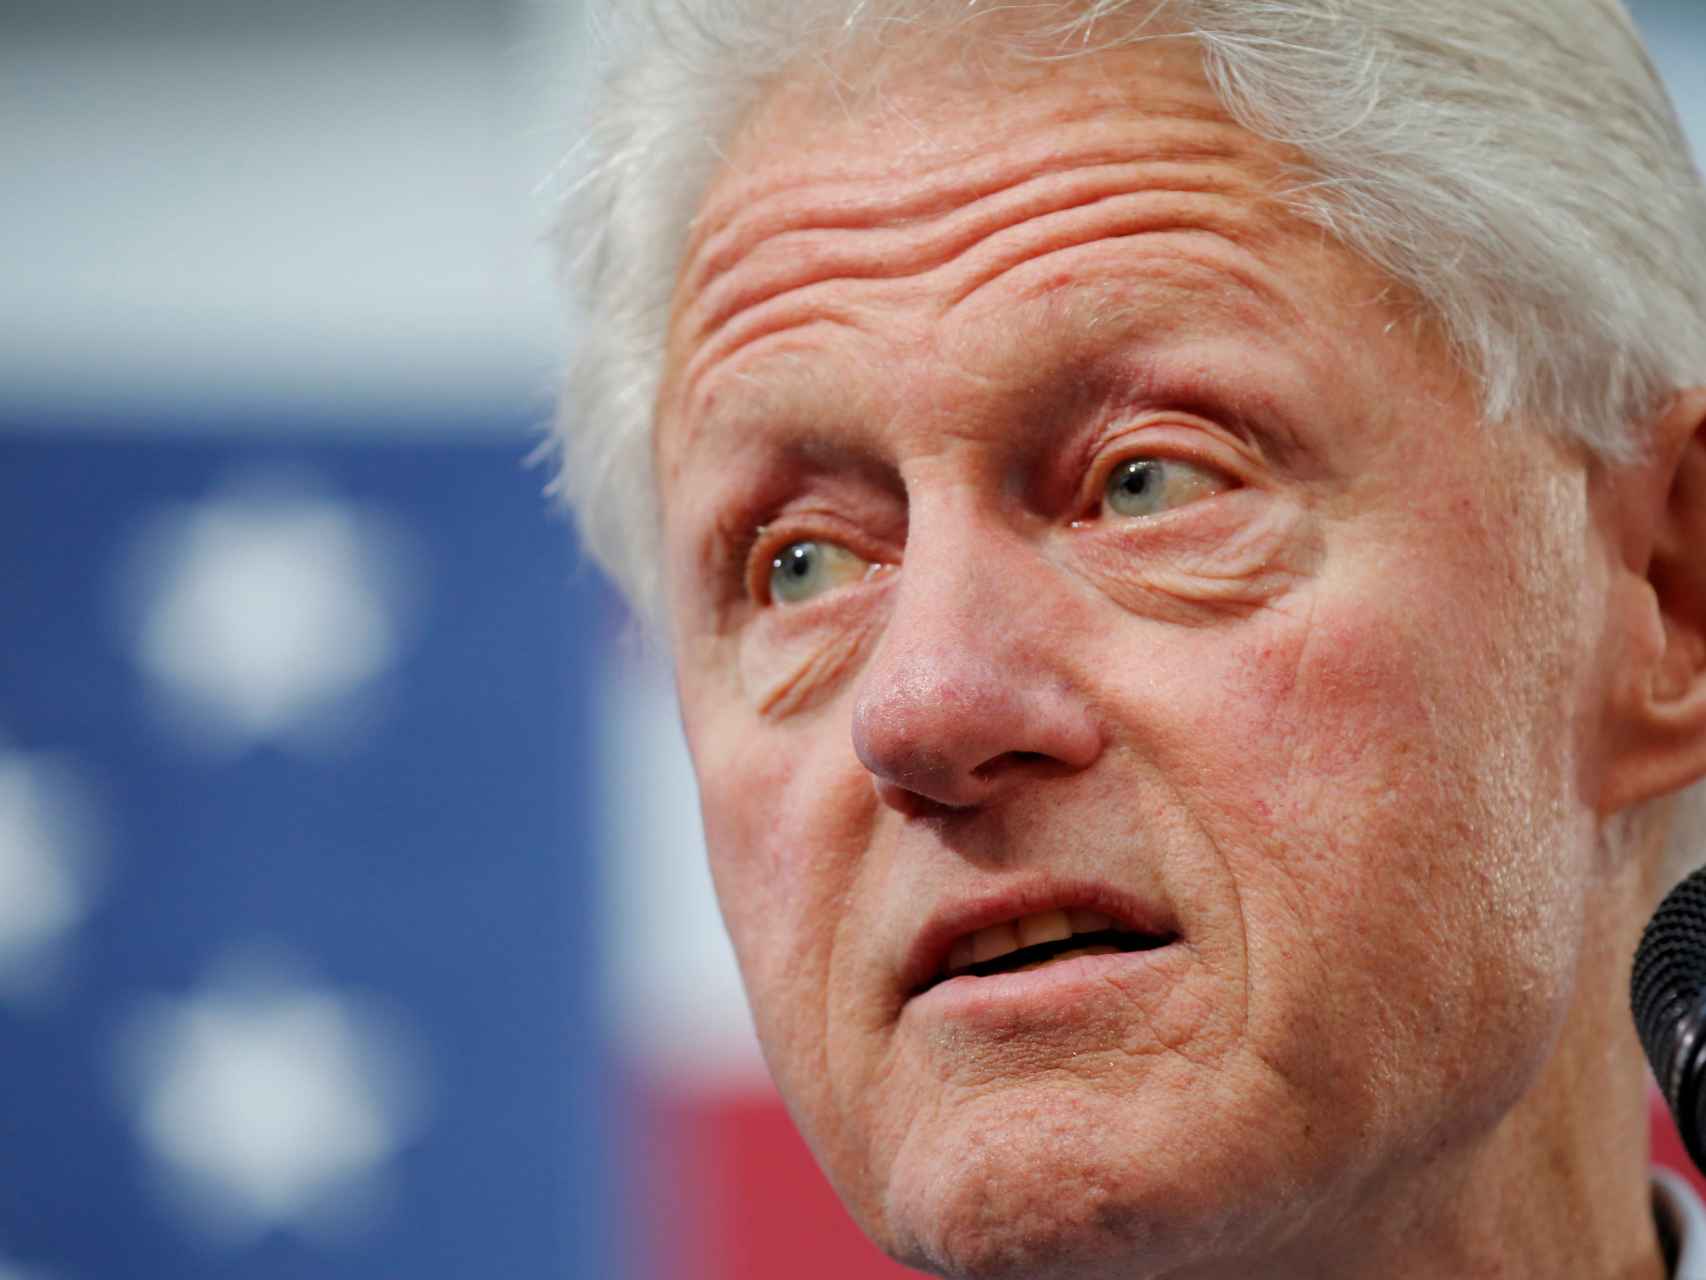 Bill Clinton dio discursos pagados a donantes de su fundación, según documentos filtrados.